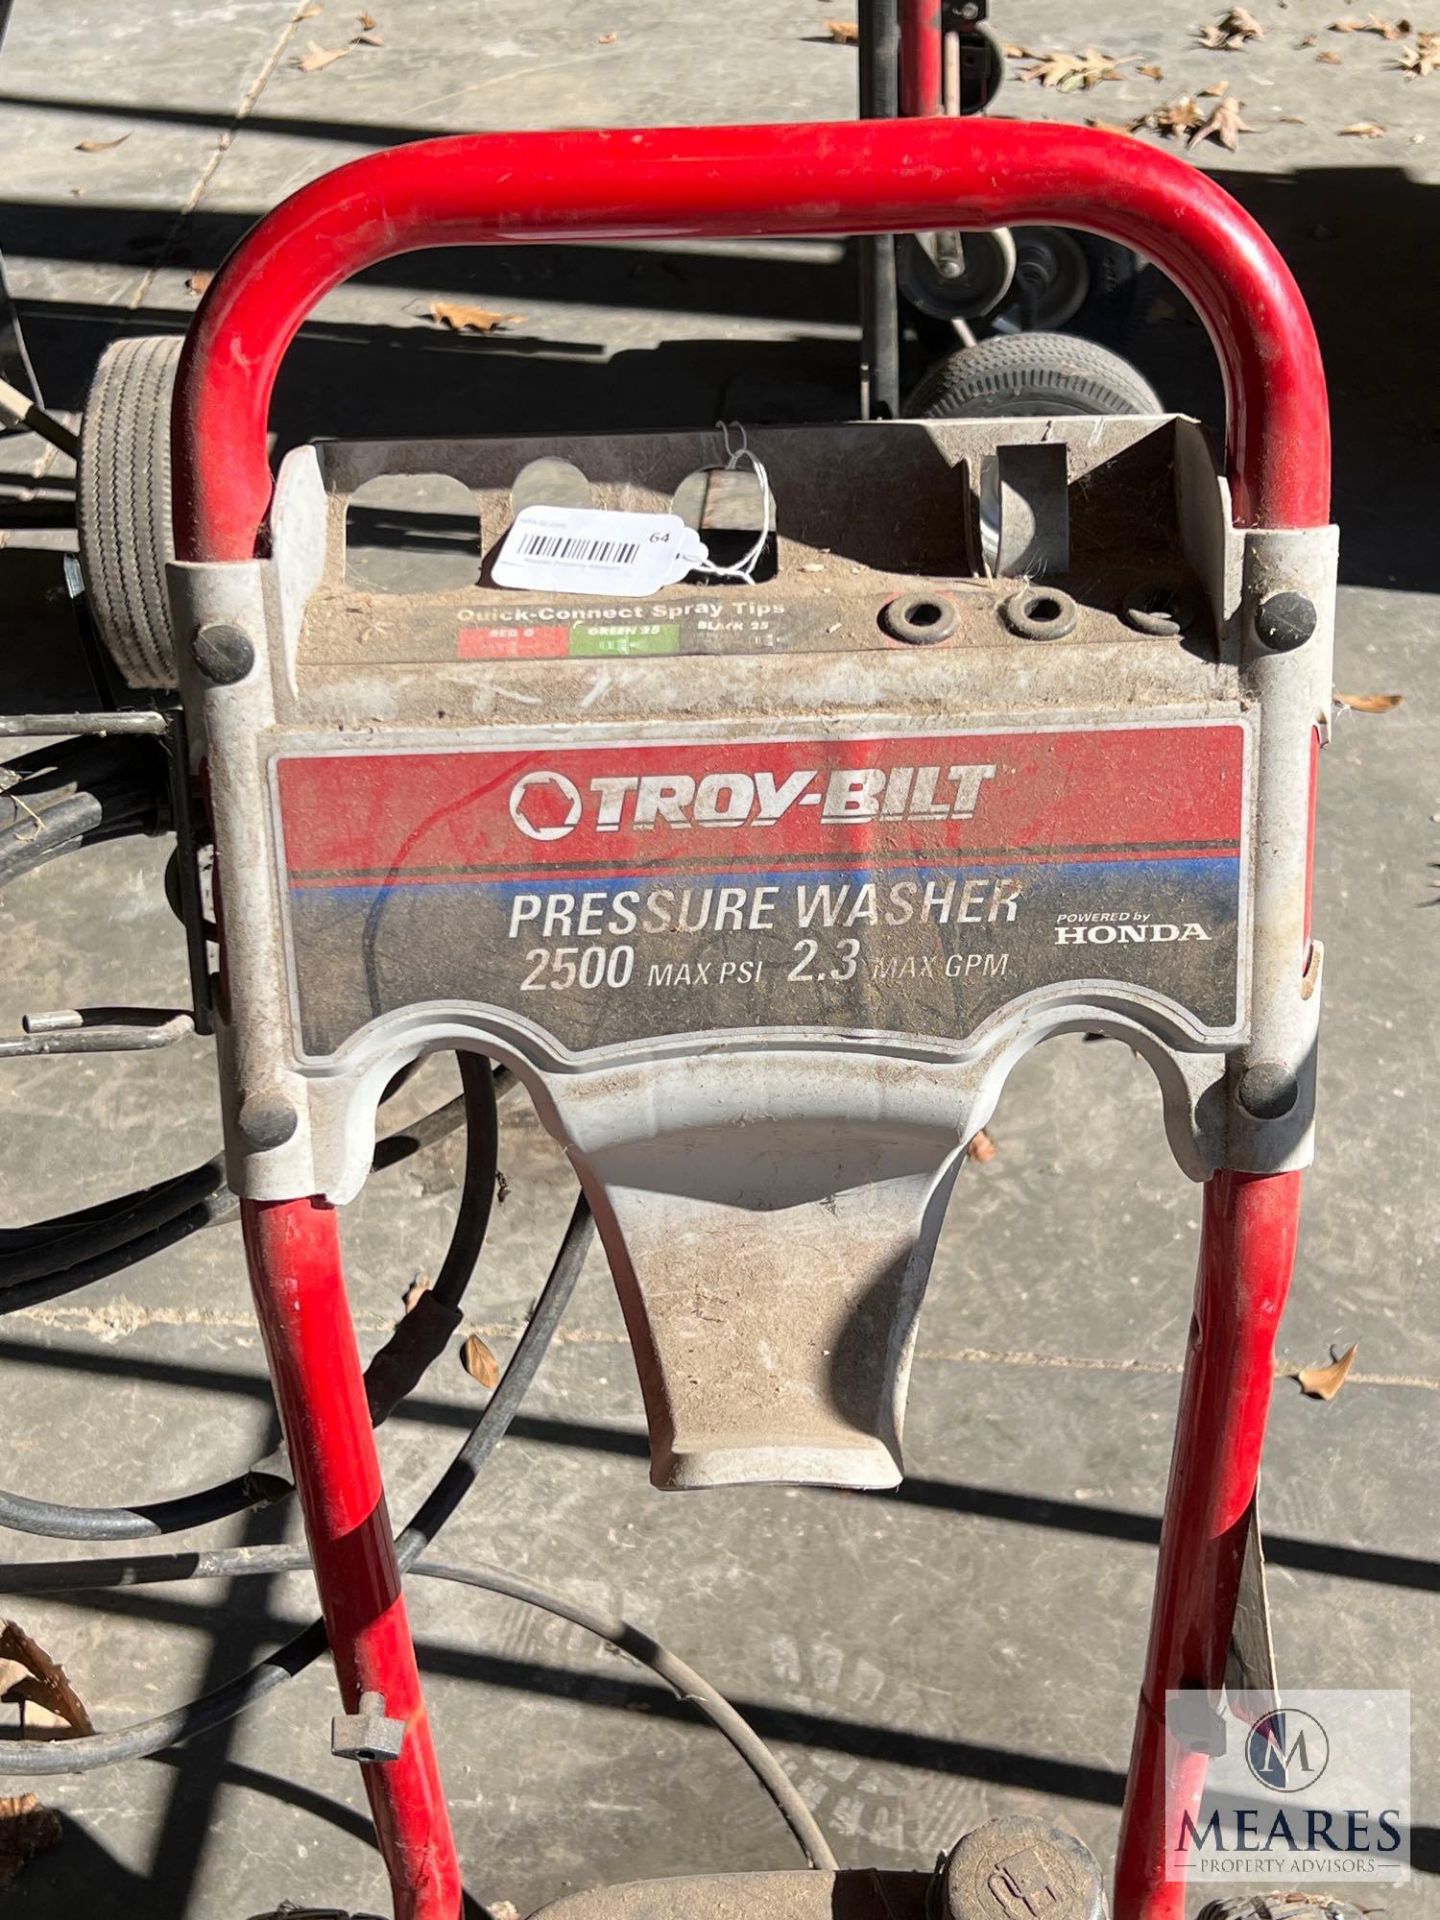 Troy-Bilt 2550 Max PSI Pressure Washer - Image 3 of 4